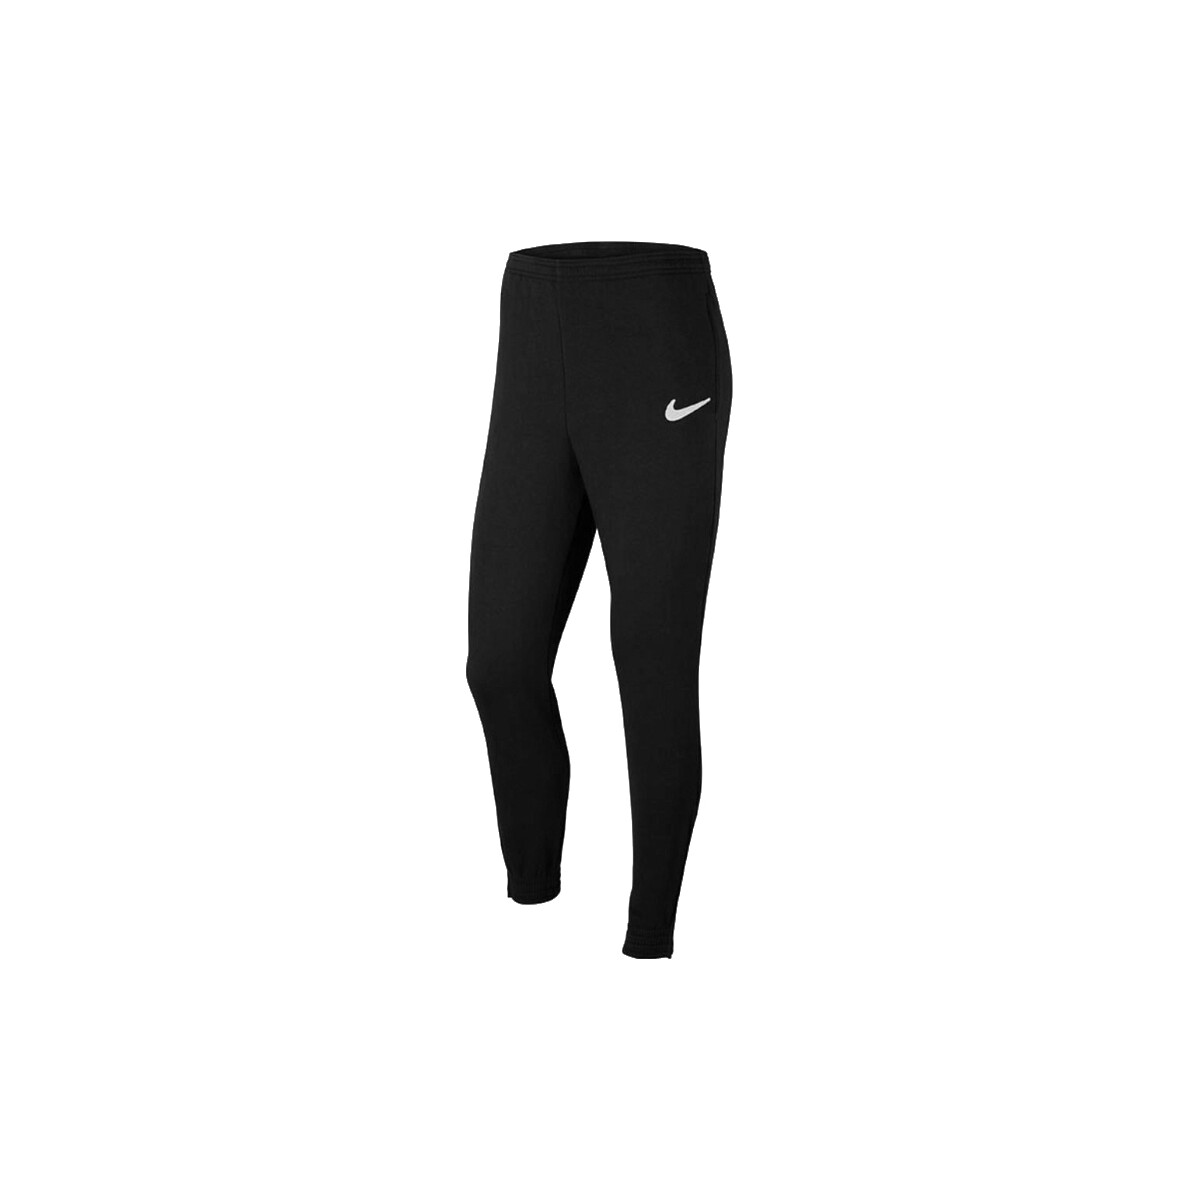 textil Herr Joggingbyxor Nike Park 20 Fleece Pants Svart